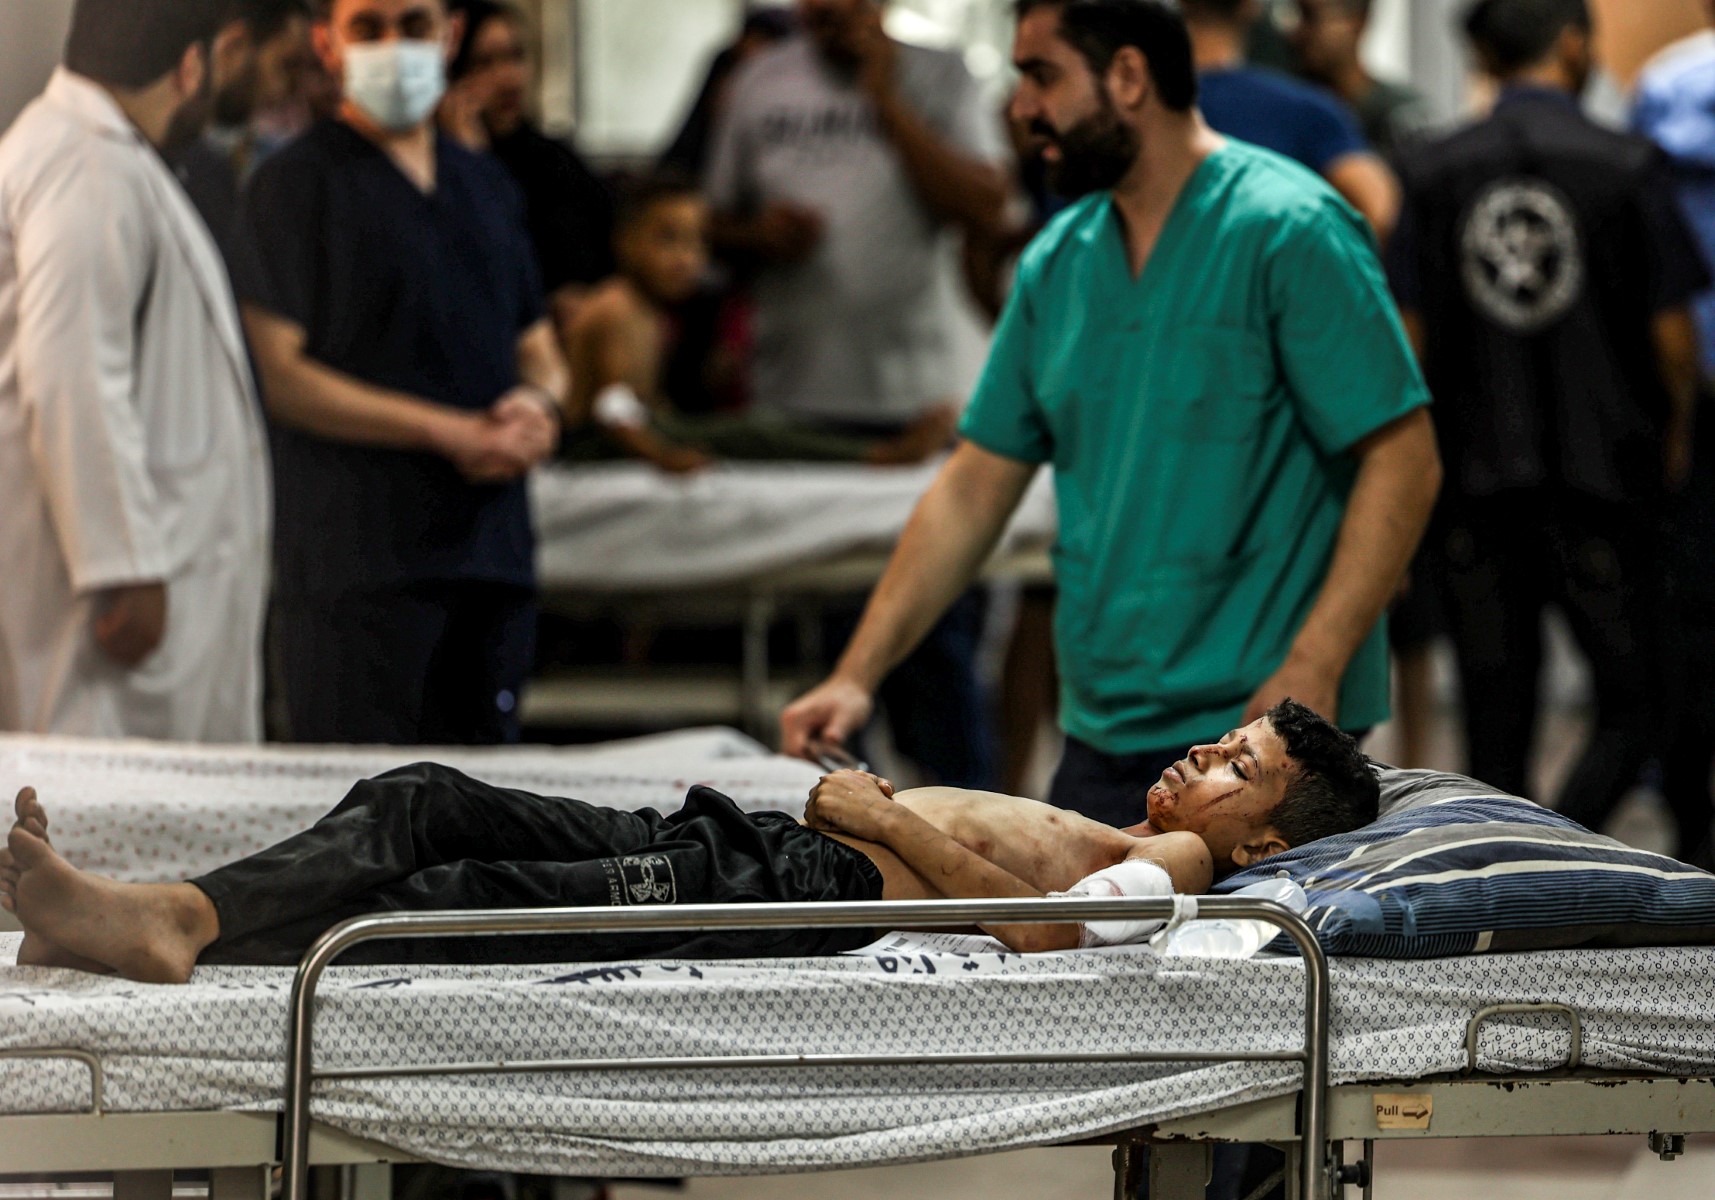 Palestinian child injured in Israeli attack